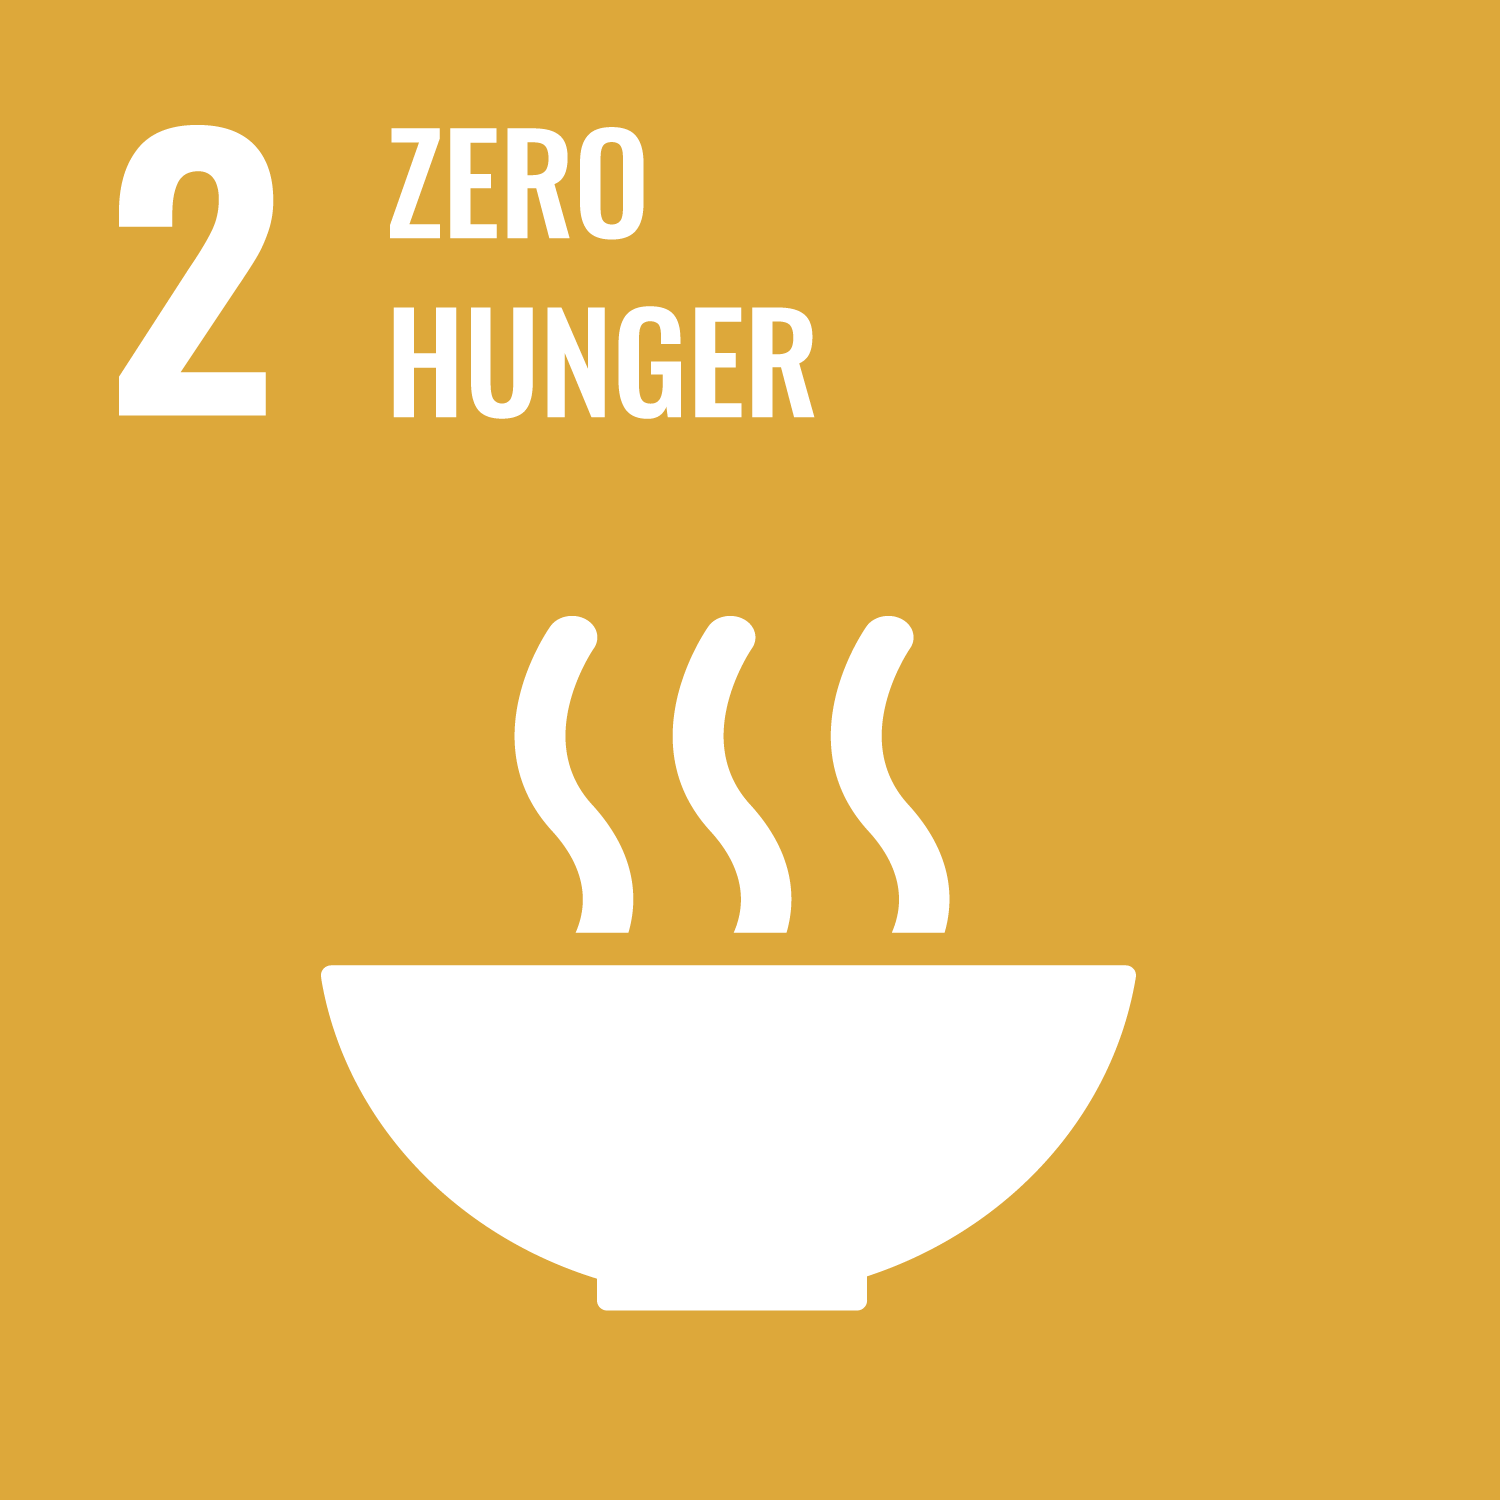 United Nations Sustainable Development Goal Number 2 Zero Hunger